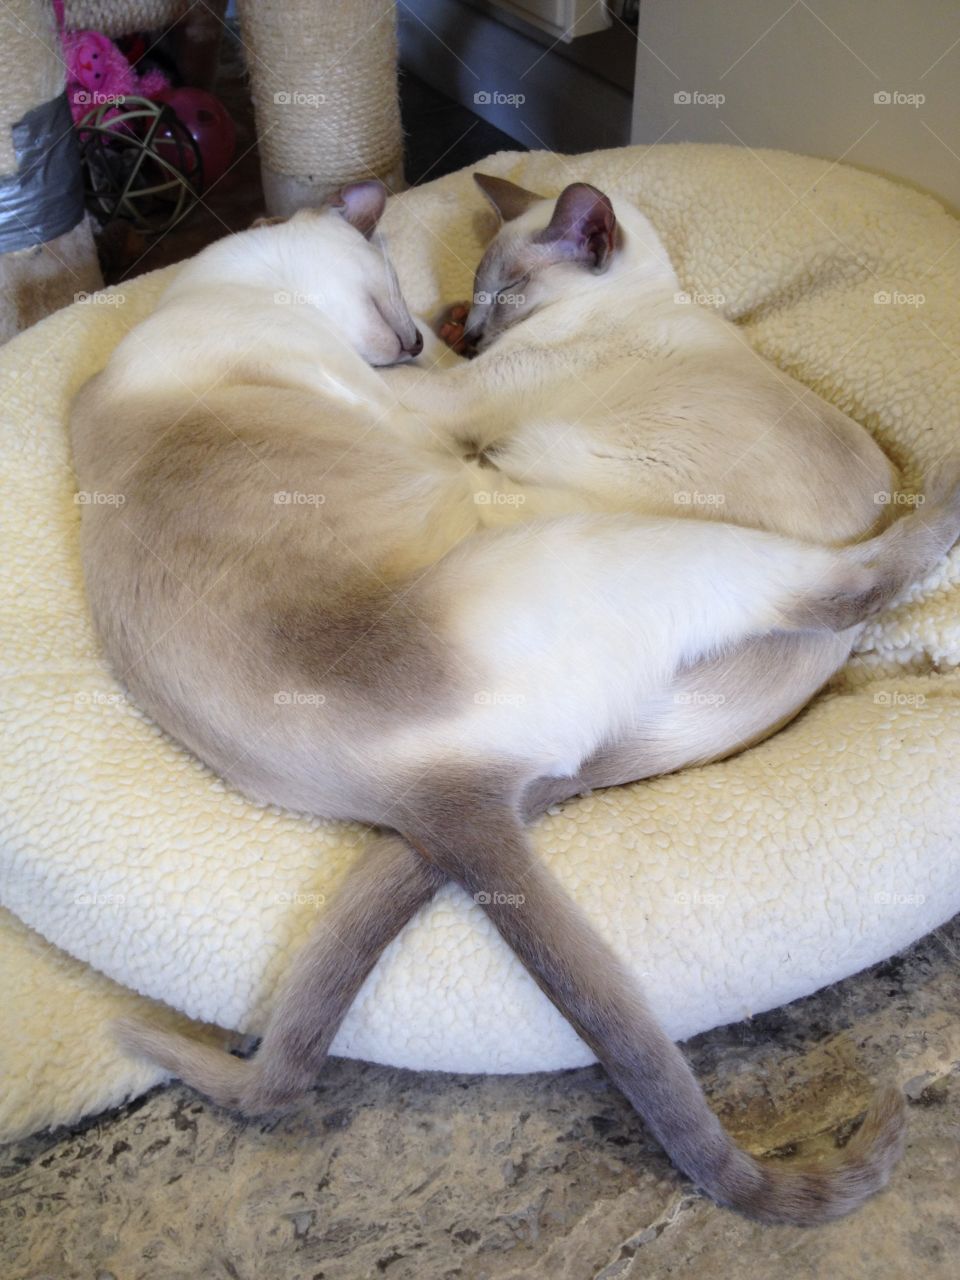 Siamese cats resting


